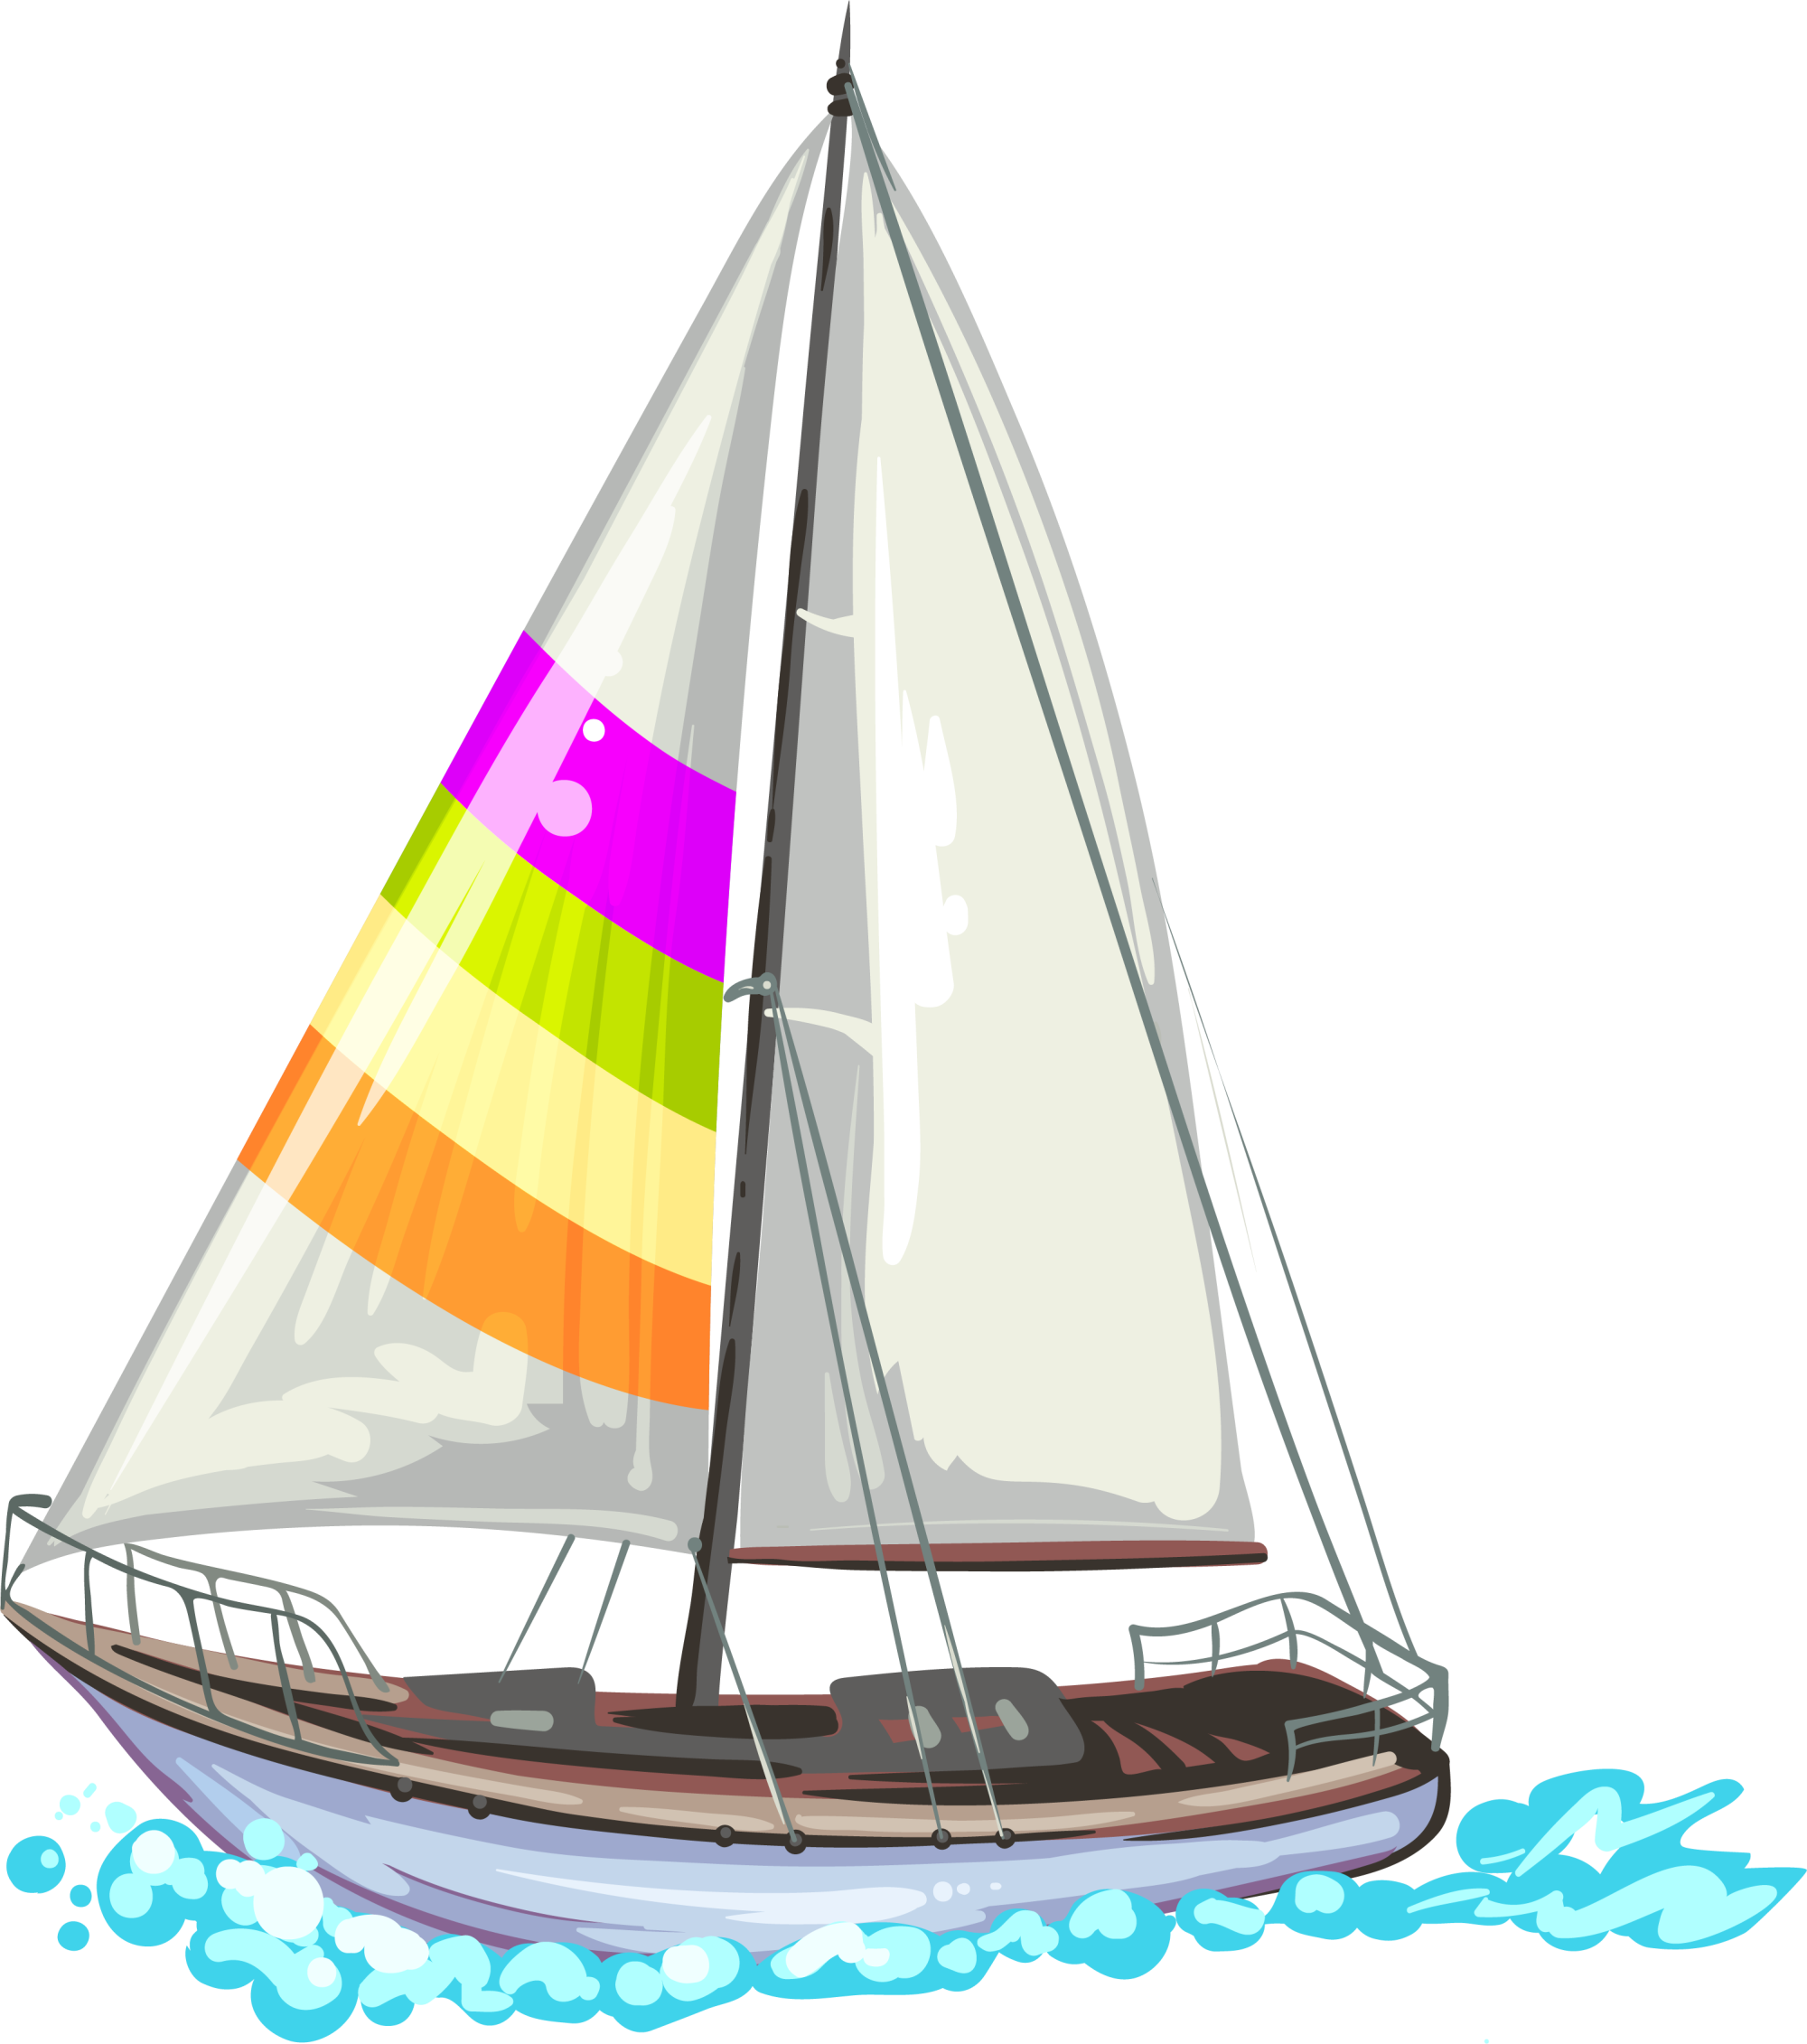 Colorful Sailboat Illustration